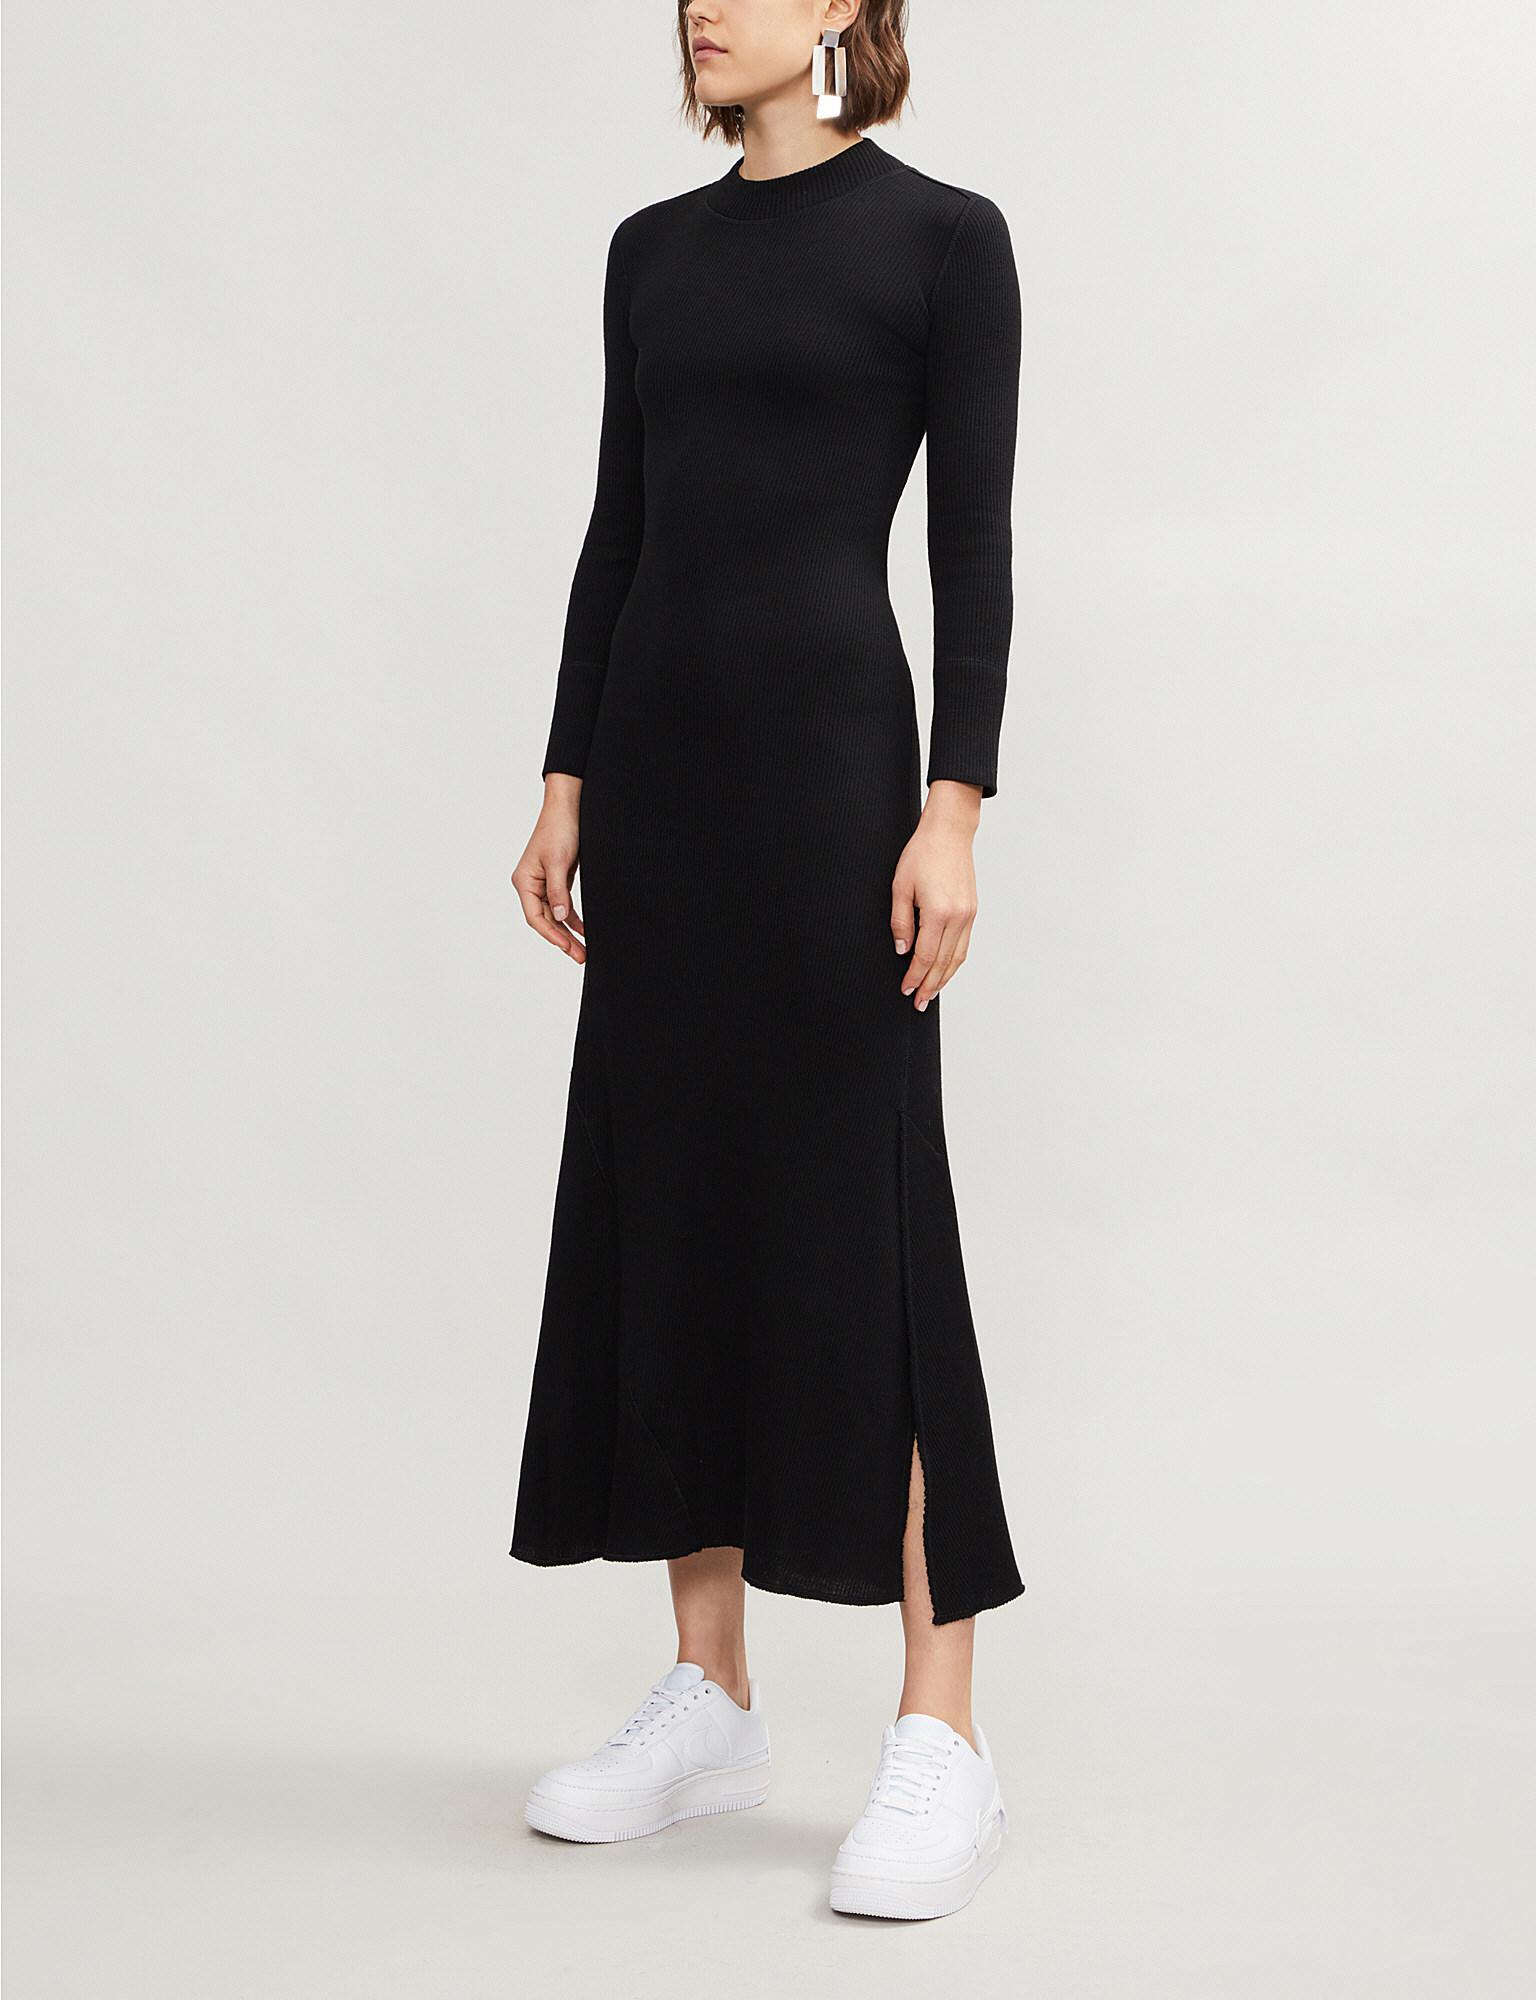 Theory Rib-knit Long-sleeved Midi Dress in Black | Lyst